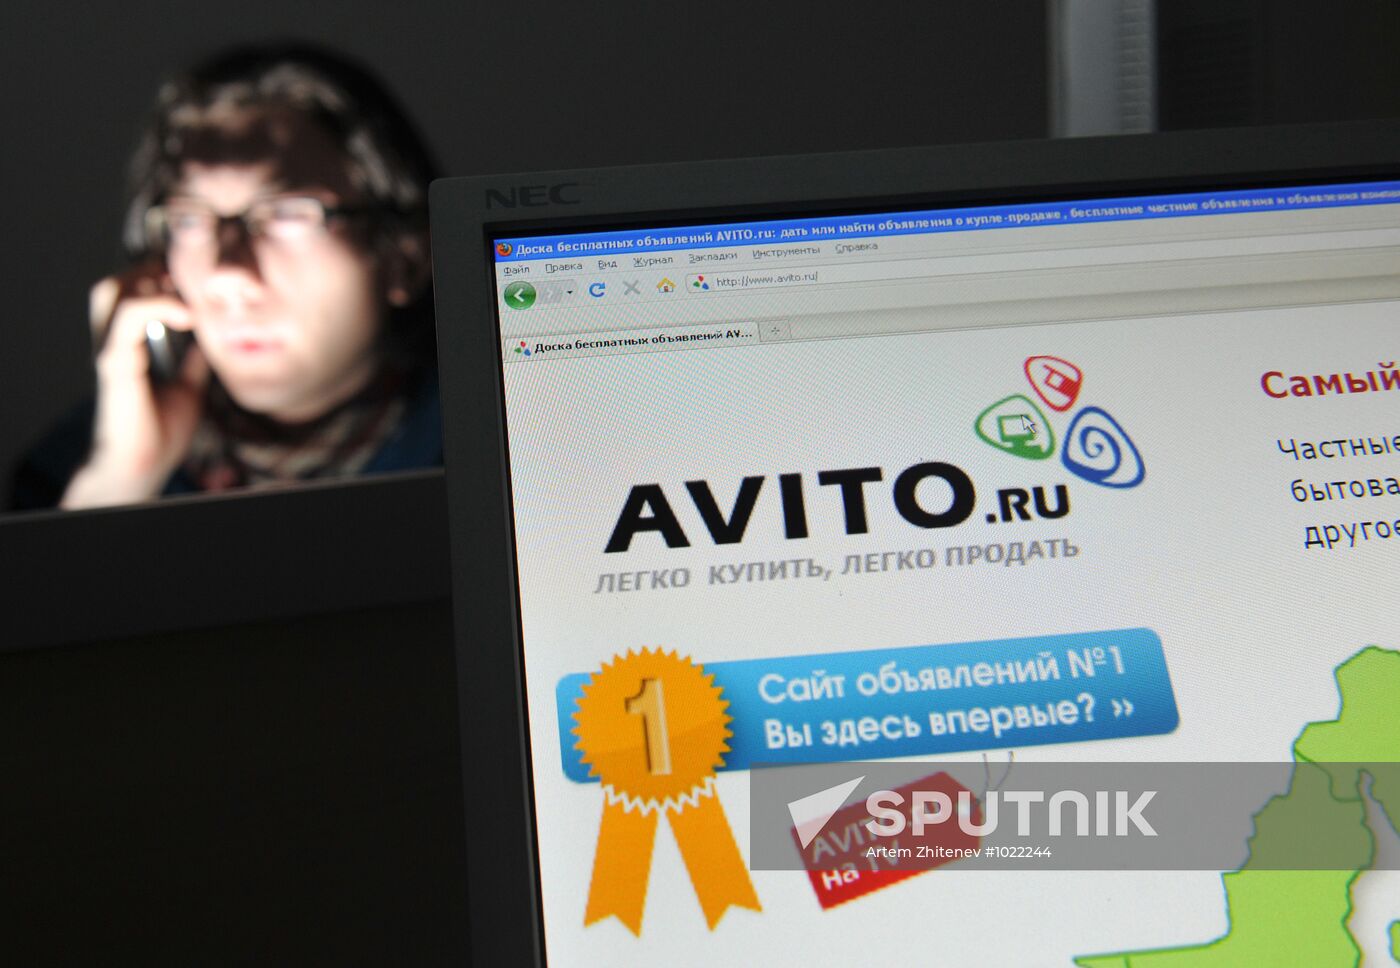 AVITO free ads website